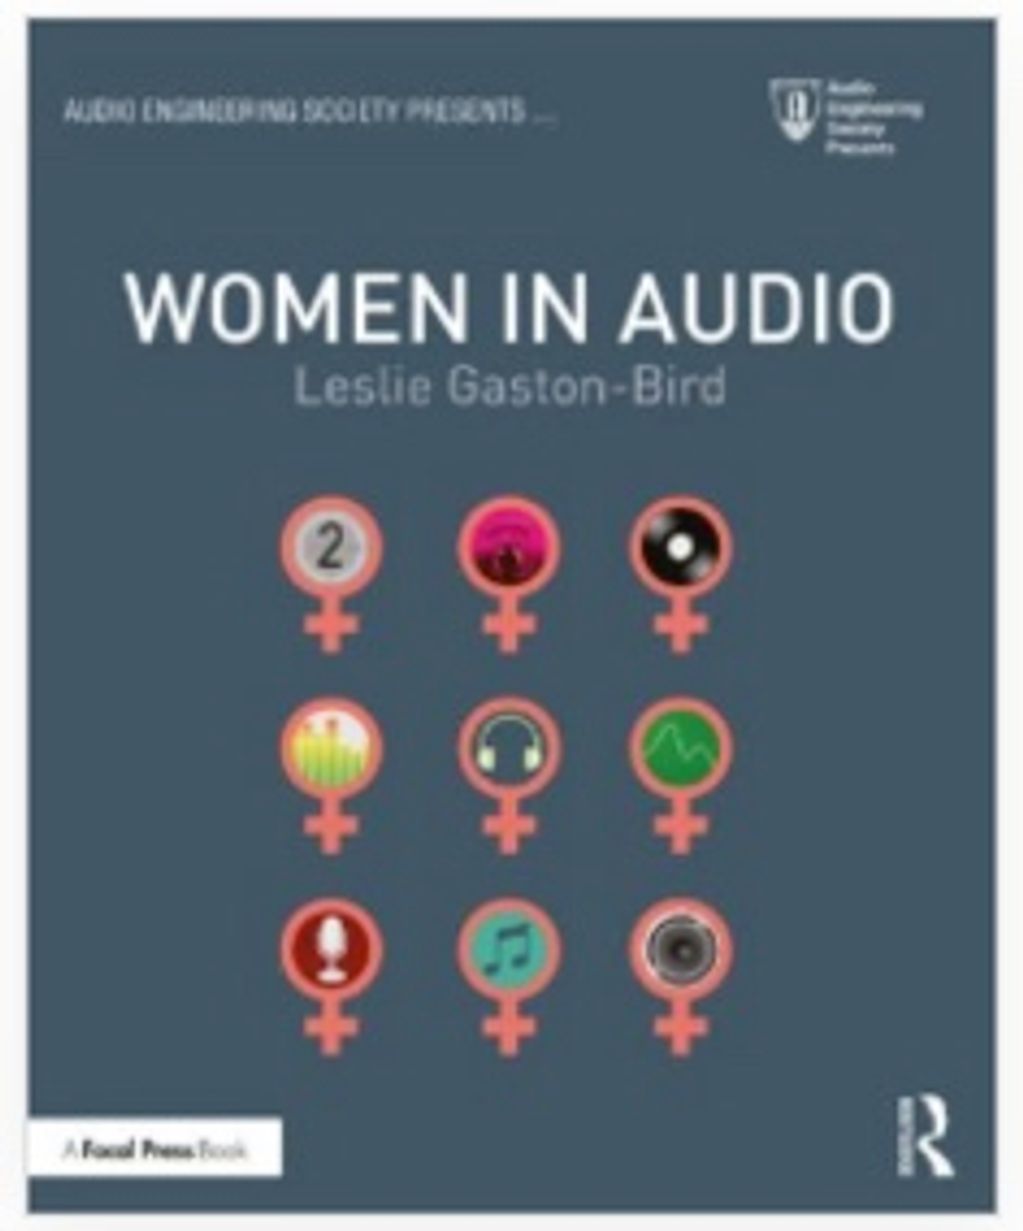 Women In Audio
December 2019
Catharine Wood
Planetwood Studios